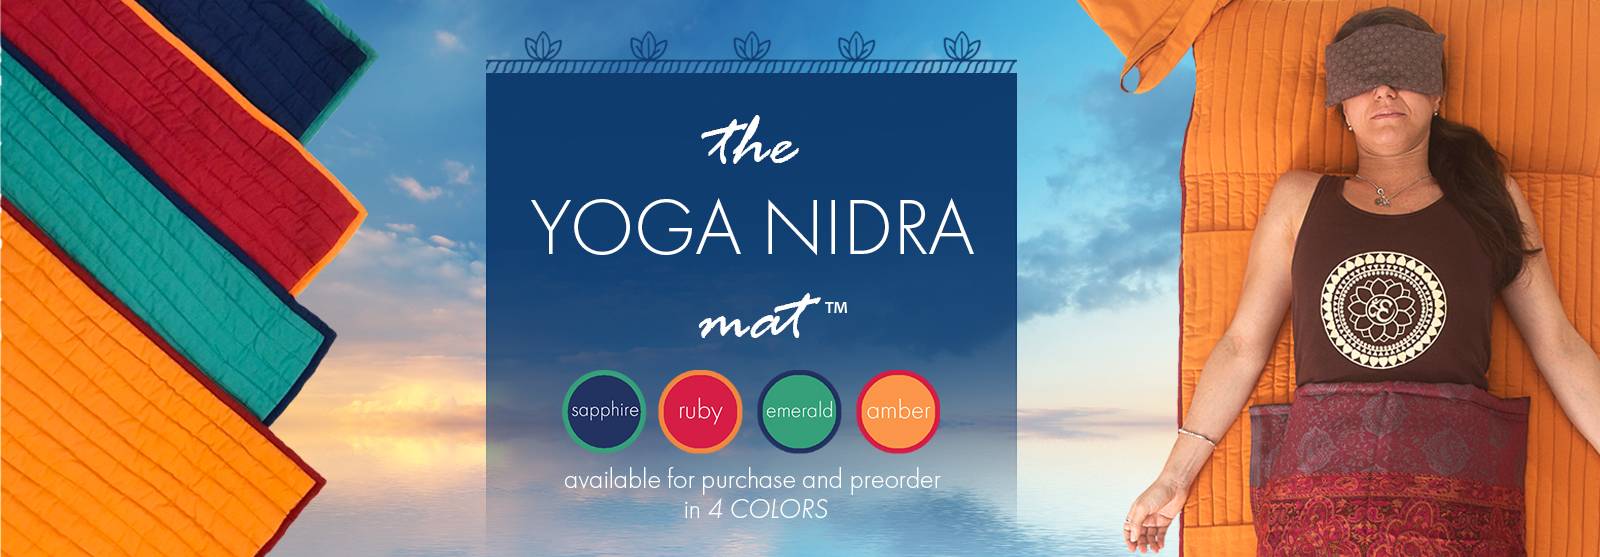 Yoga Nidra Mat